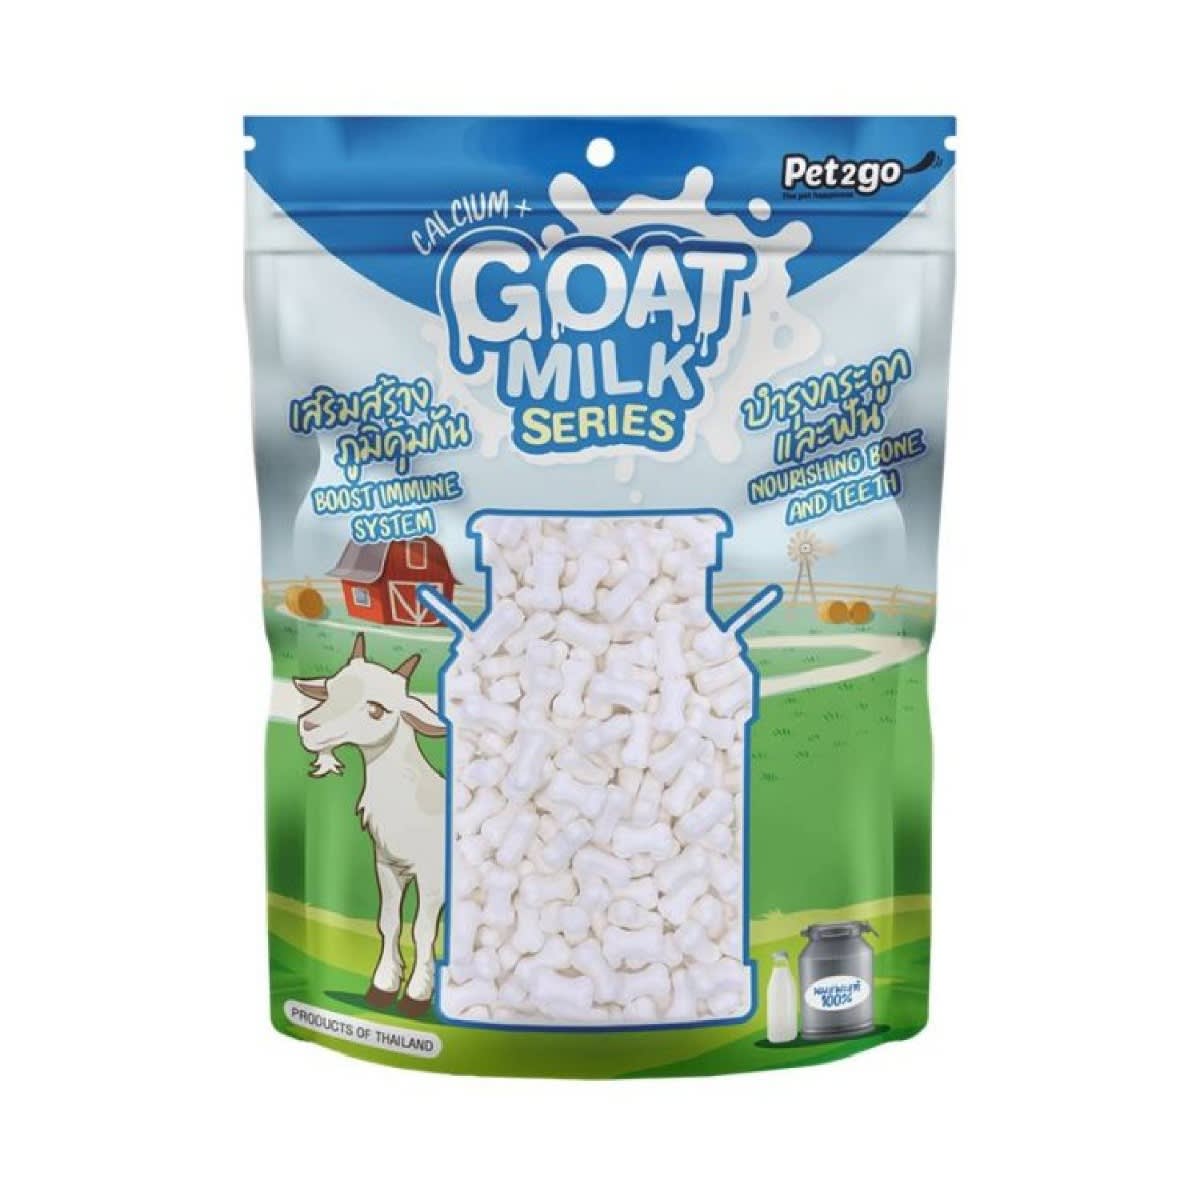 Goat Milk Series โกท มิลค์ ซีรี่ ขนมนมแพะเม็ดเล็ก เสริมสร้างภูมิคุ้มกัน บำรุงกระดูกและฟัน สำหรับสุนัขทุกช่วงวัย สายพันธุ์เล็ก 500 g